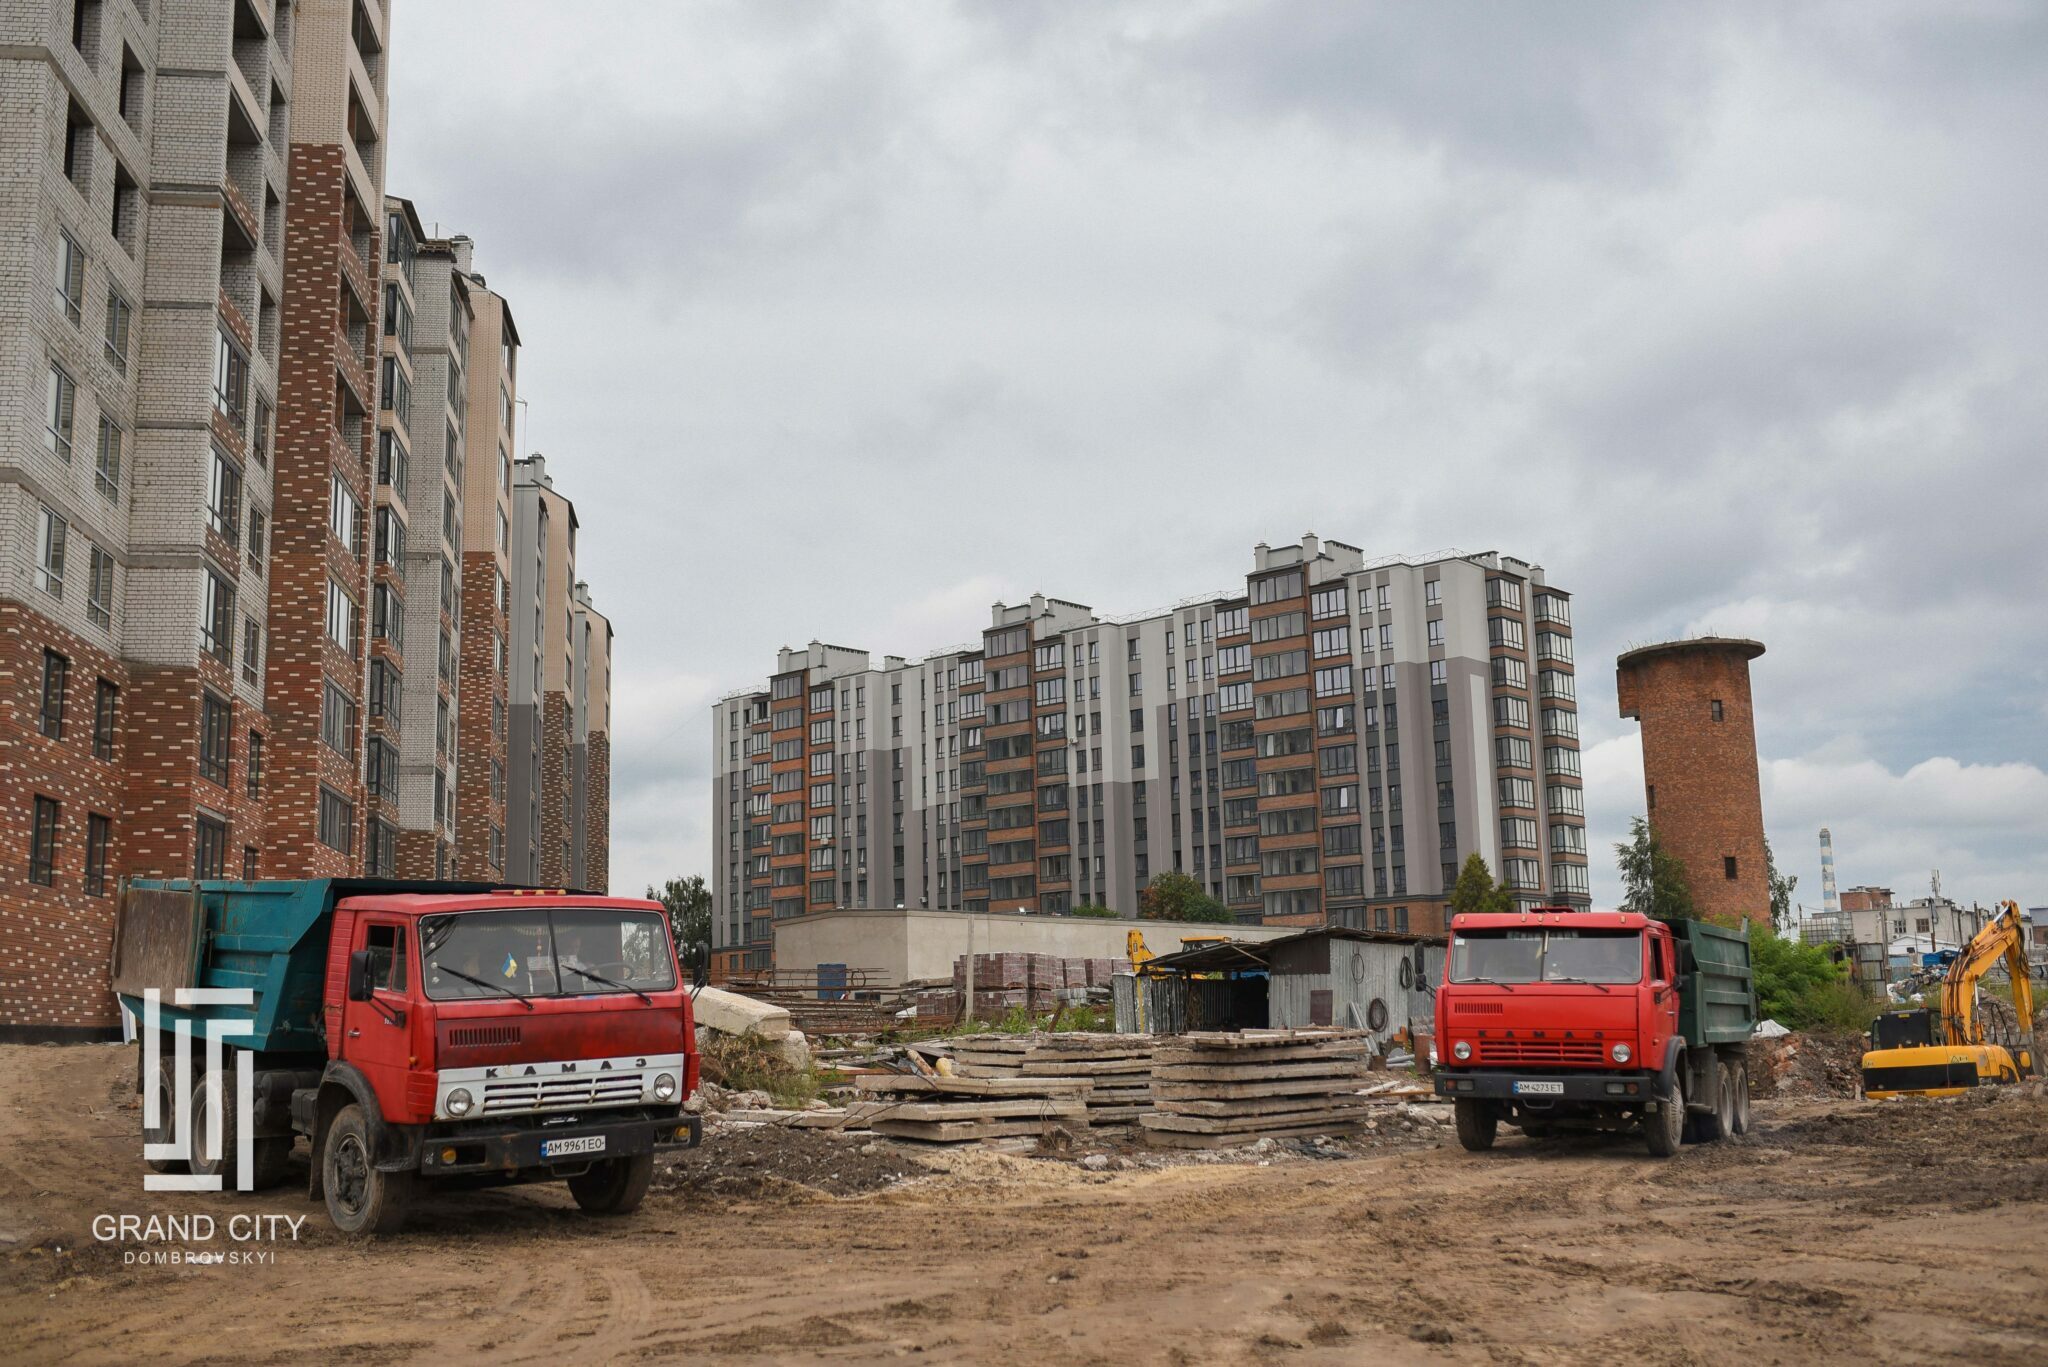 Хід будівництва ЖК Grand City Dombrovskyi, серп, 2021 рік